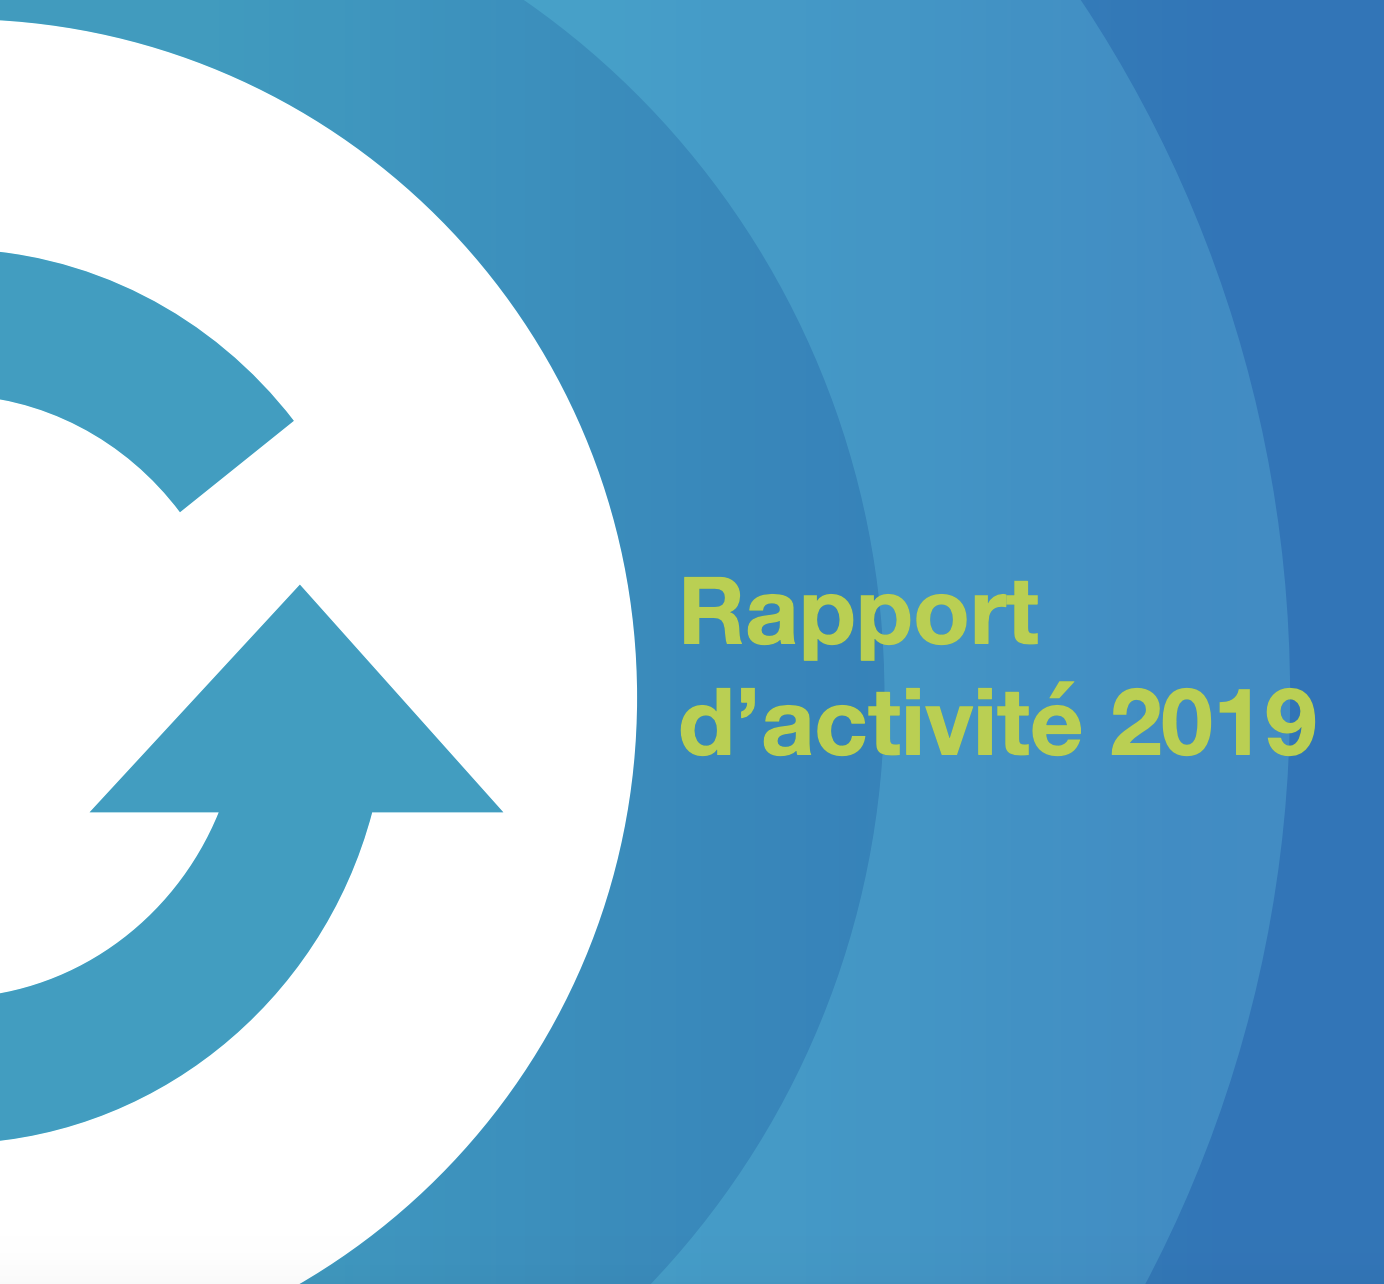 Activity report 2019